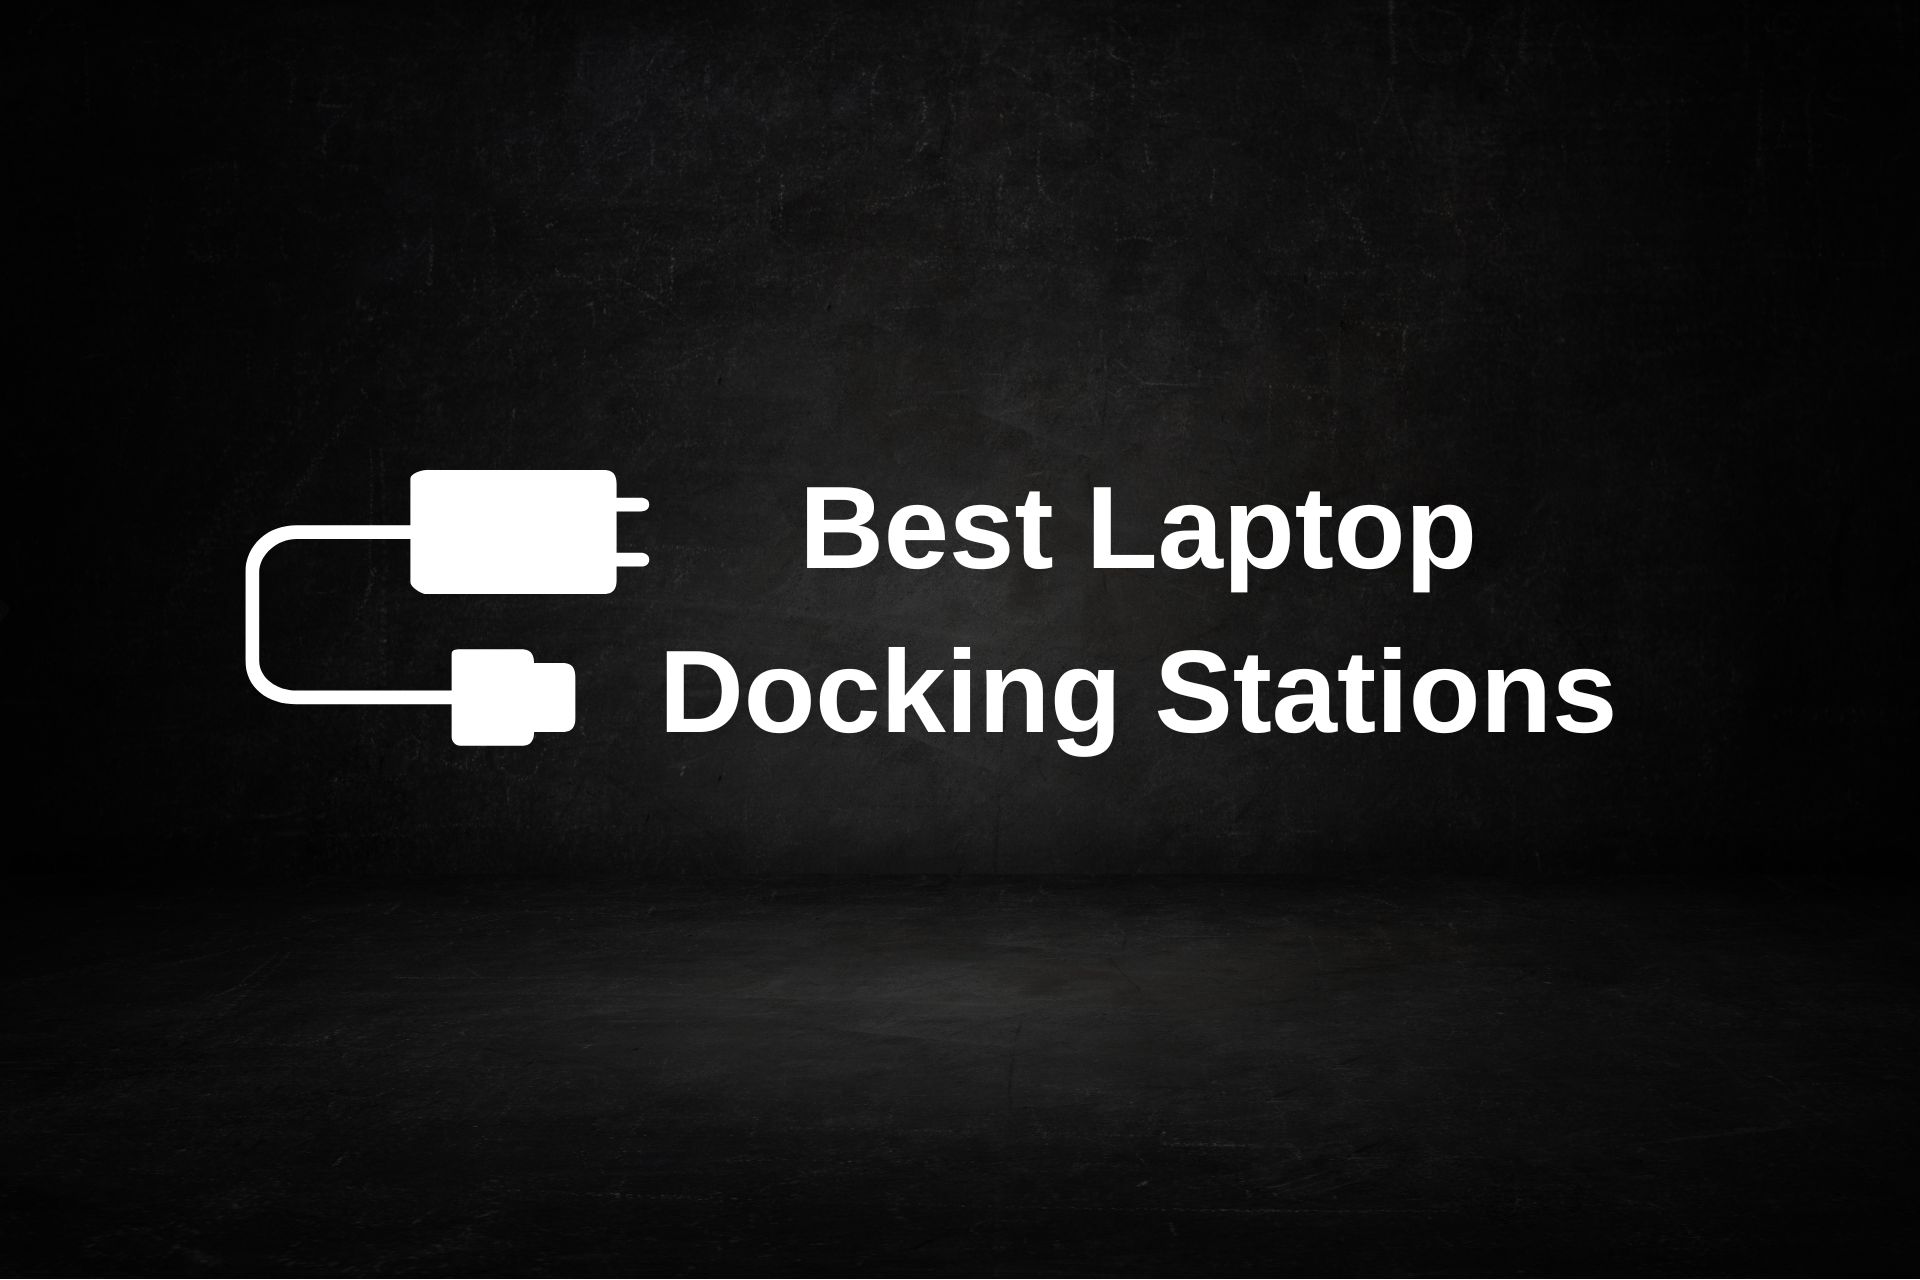 Best Laptop Docking Stations